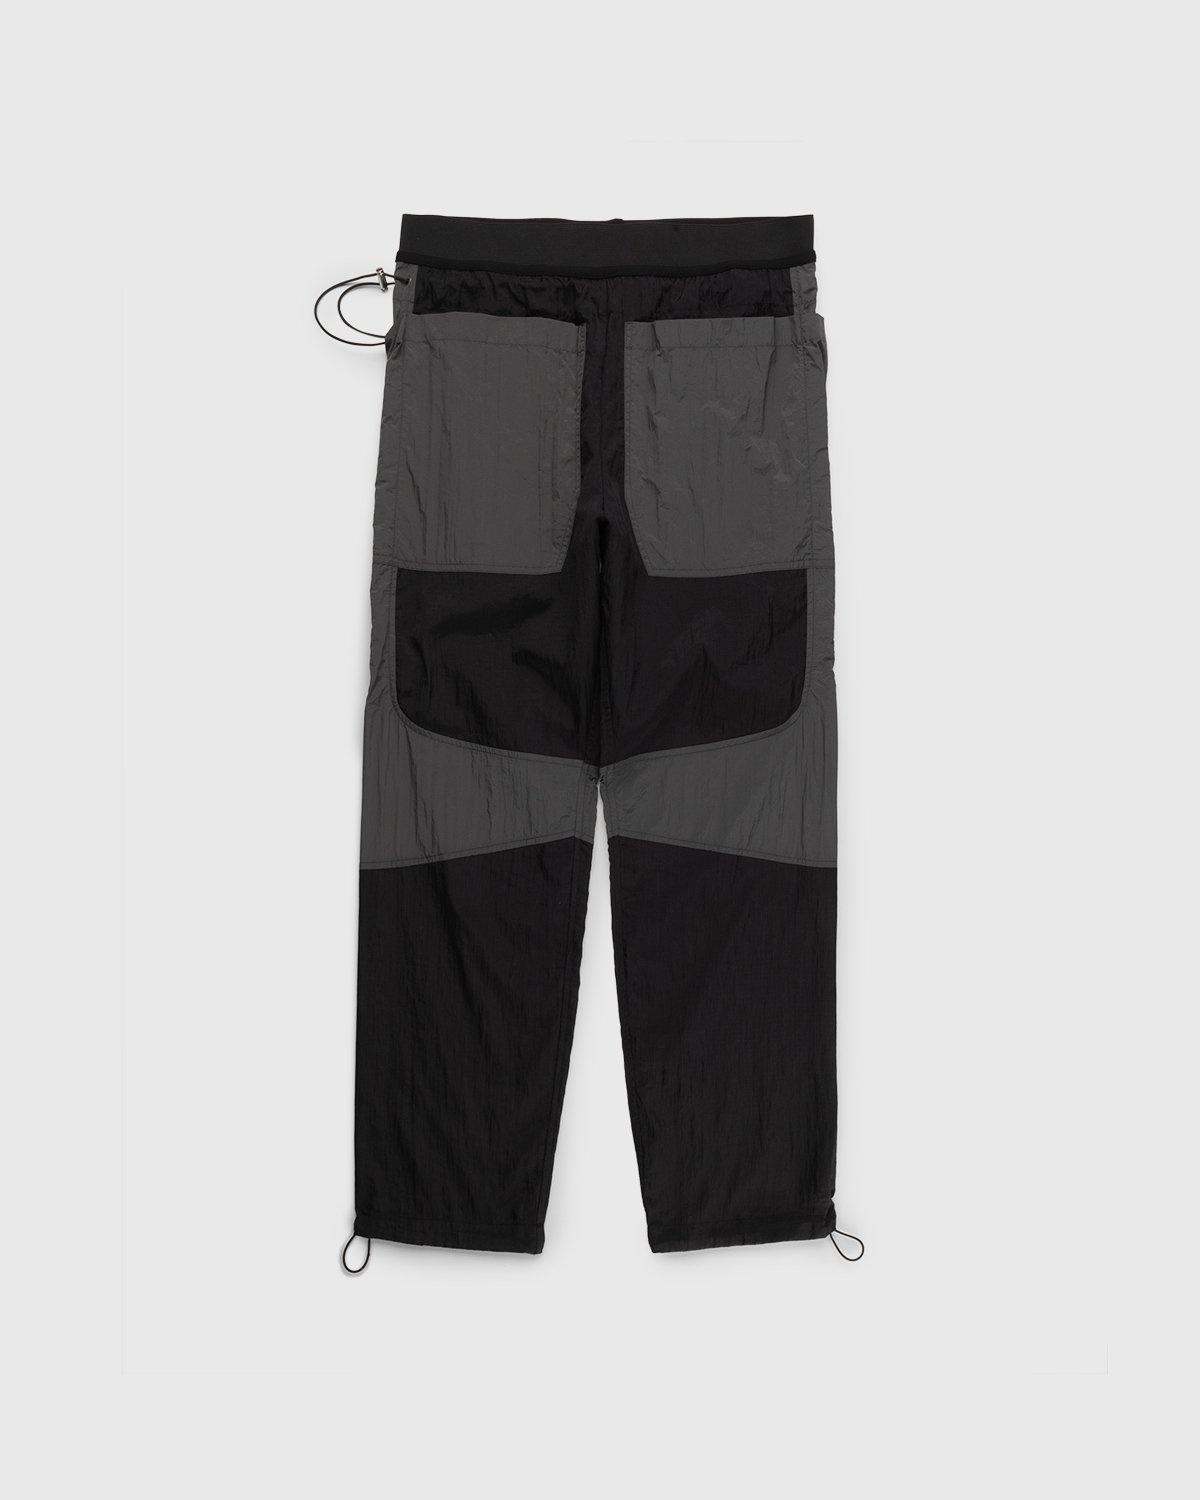 Arnar Mar Jonsson – Oroi Paneled Trouser Black/Charcoal - Work Pants - Brown - Image 2